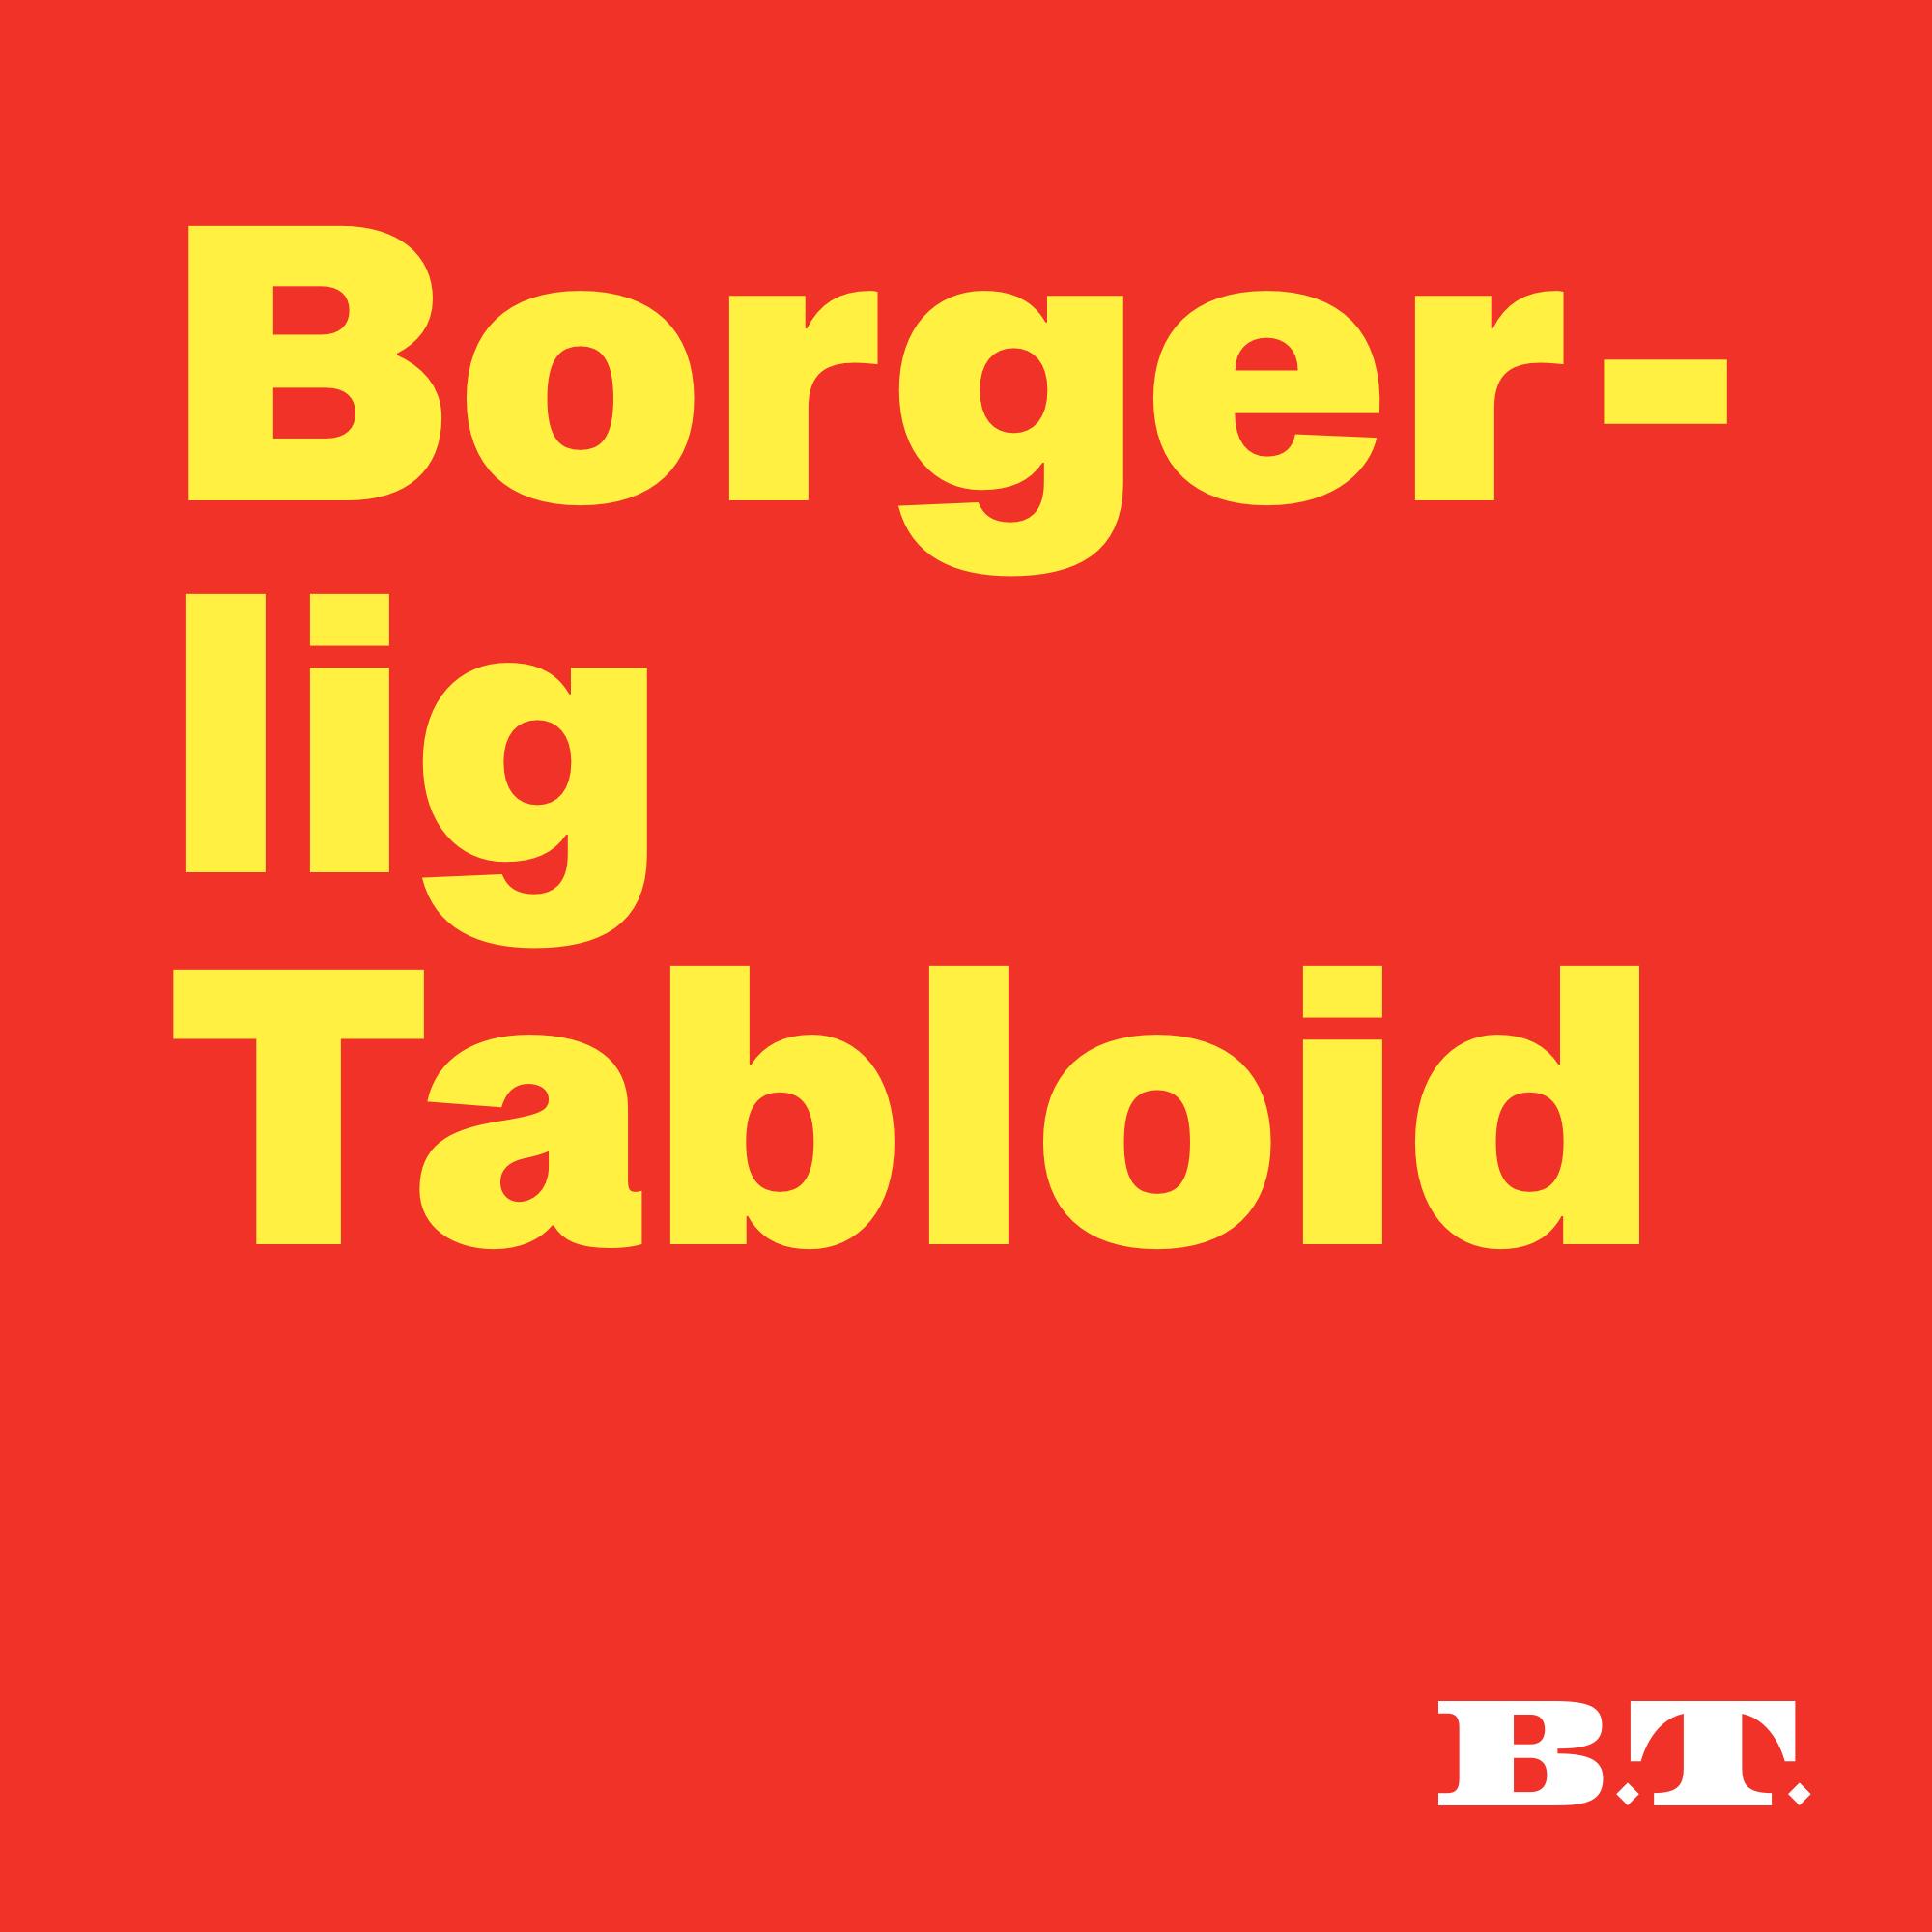 Thorborg: Folk stemmer sig til andres penge